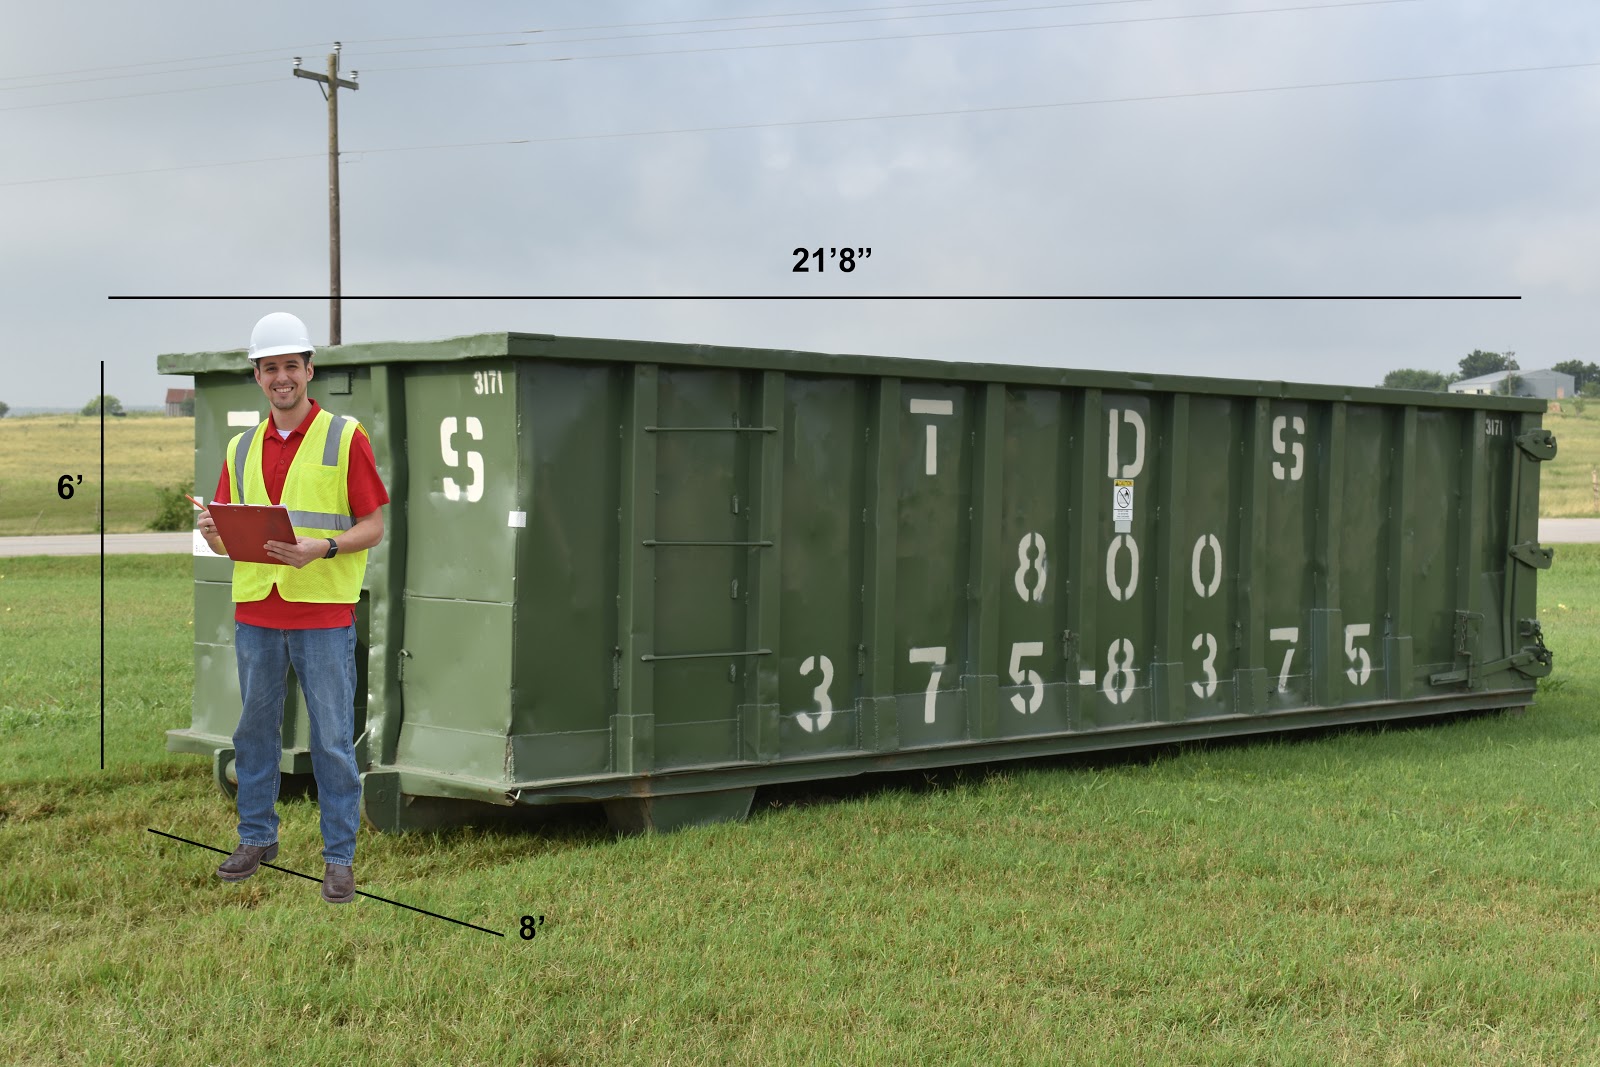 30-yard dumpster rental dimensions